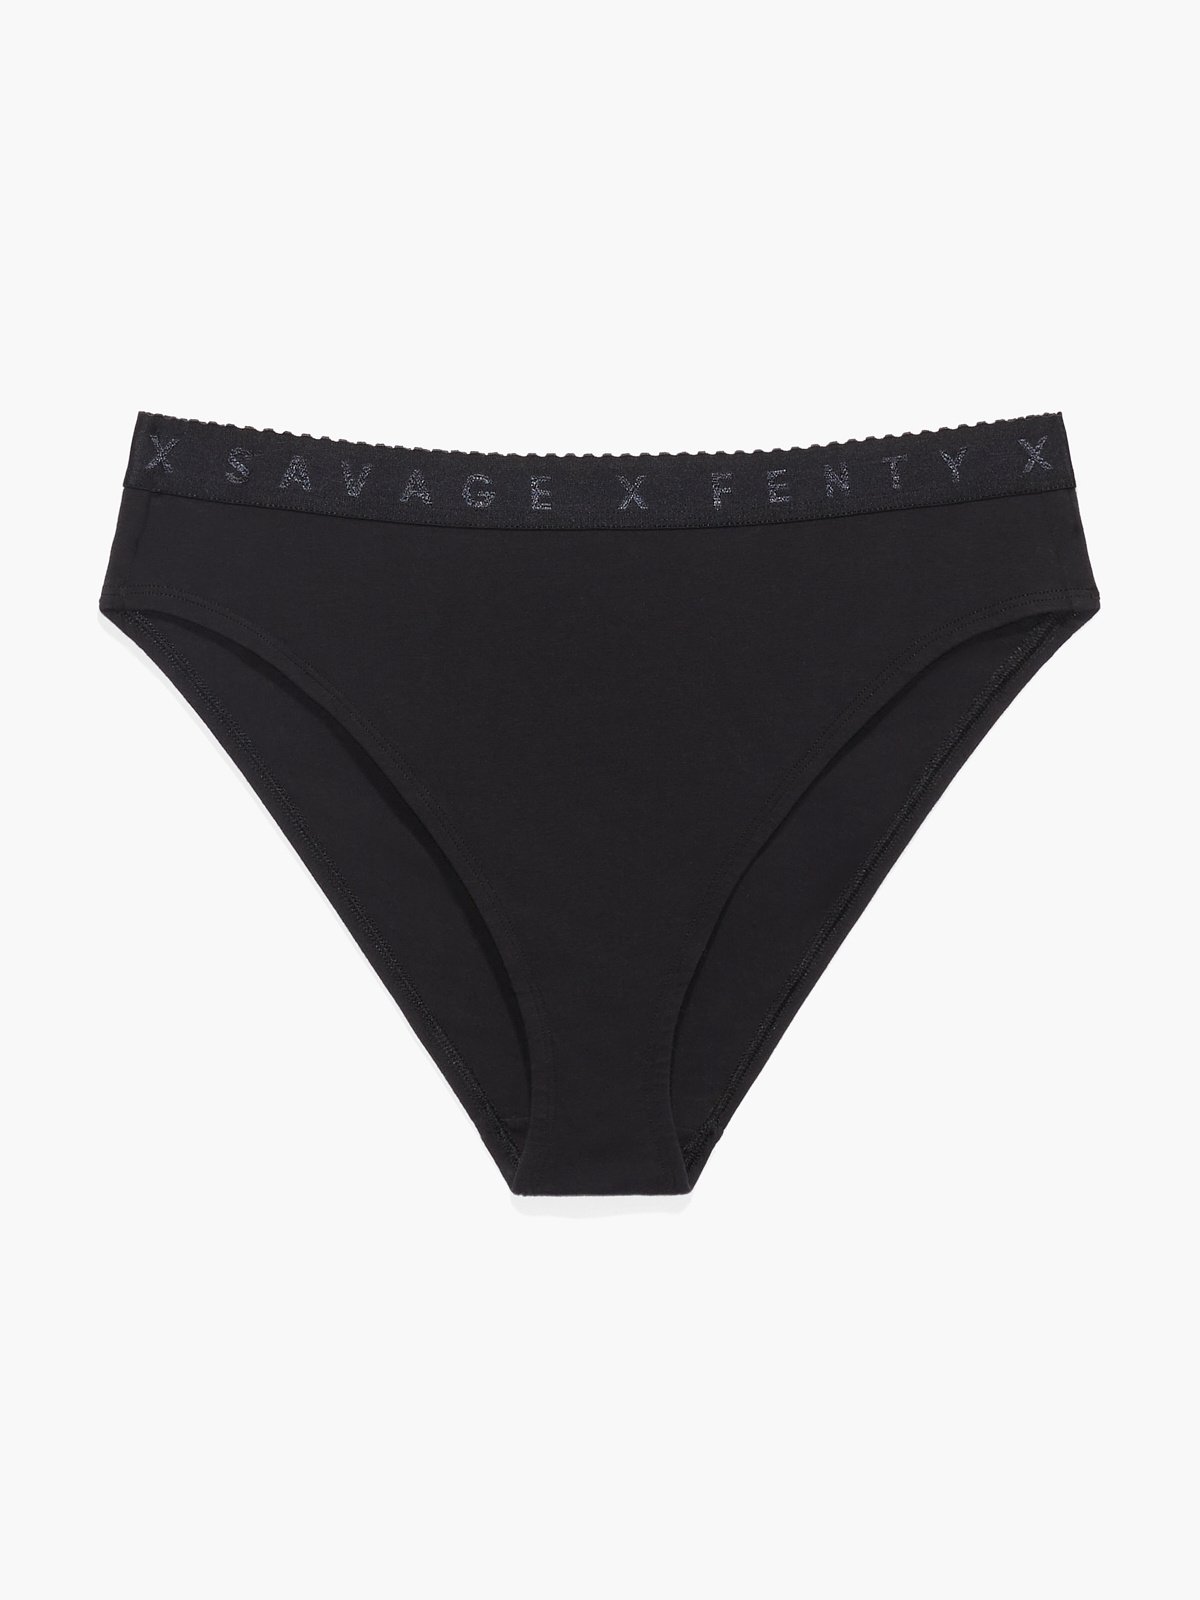 Buy Champion Women's Print Bikini Underwear (Black, Size 14